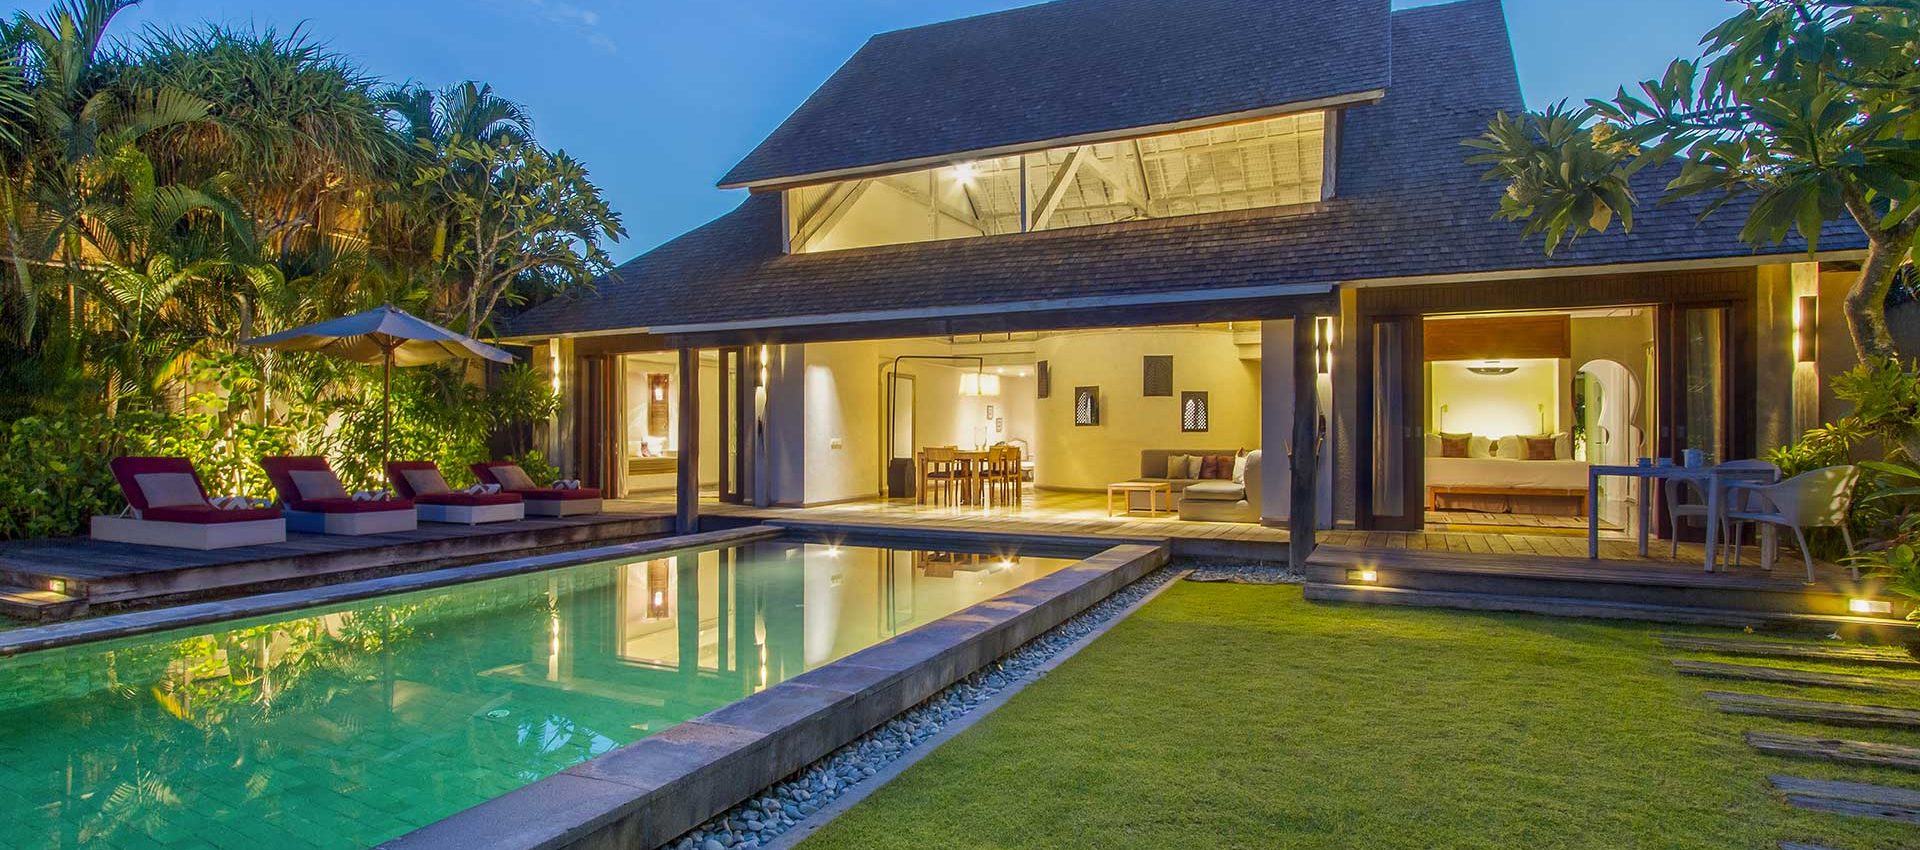 Space Villas Bali - Spacious private pool villas in Seminyak